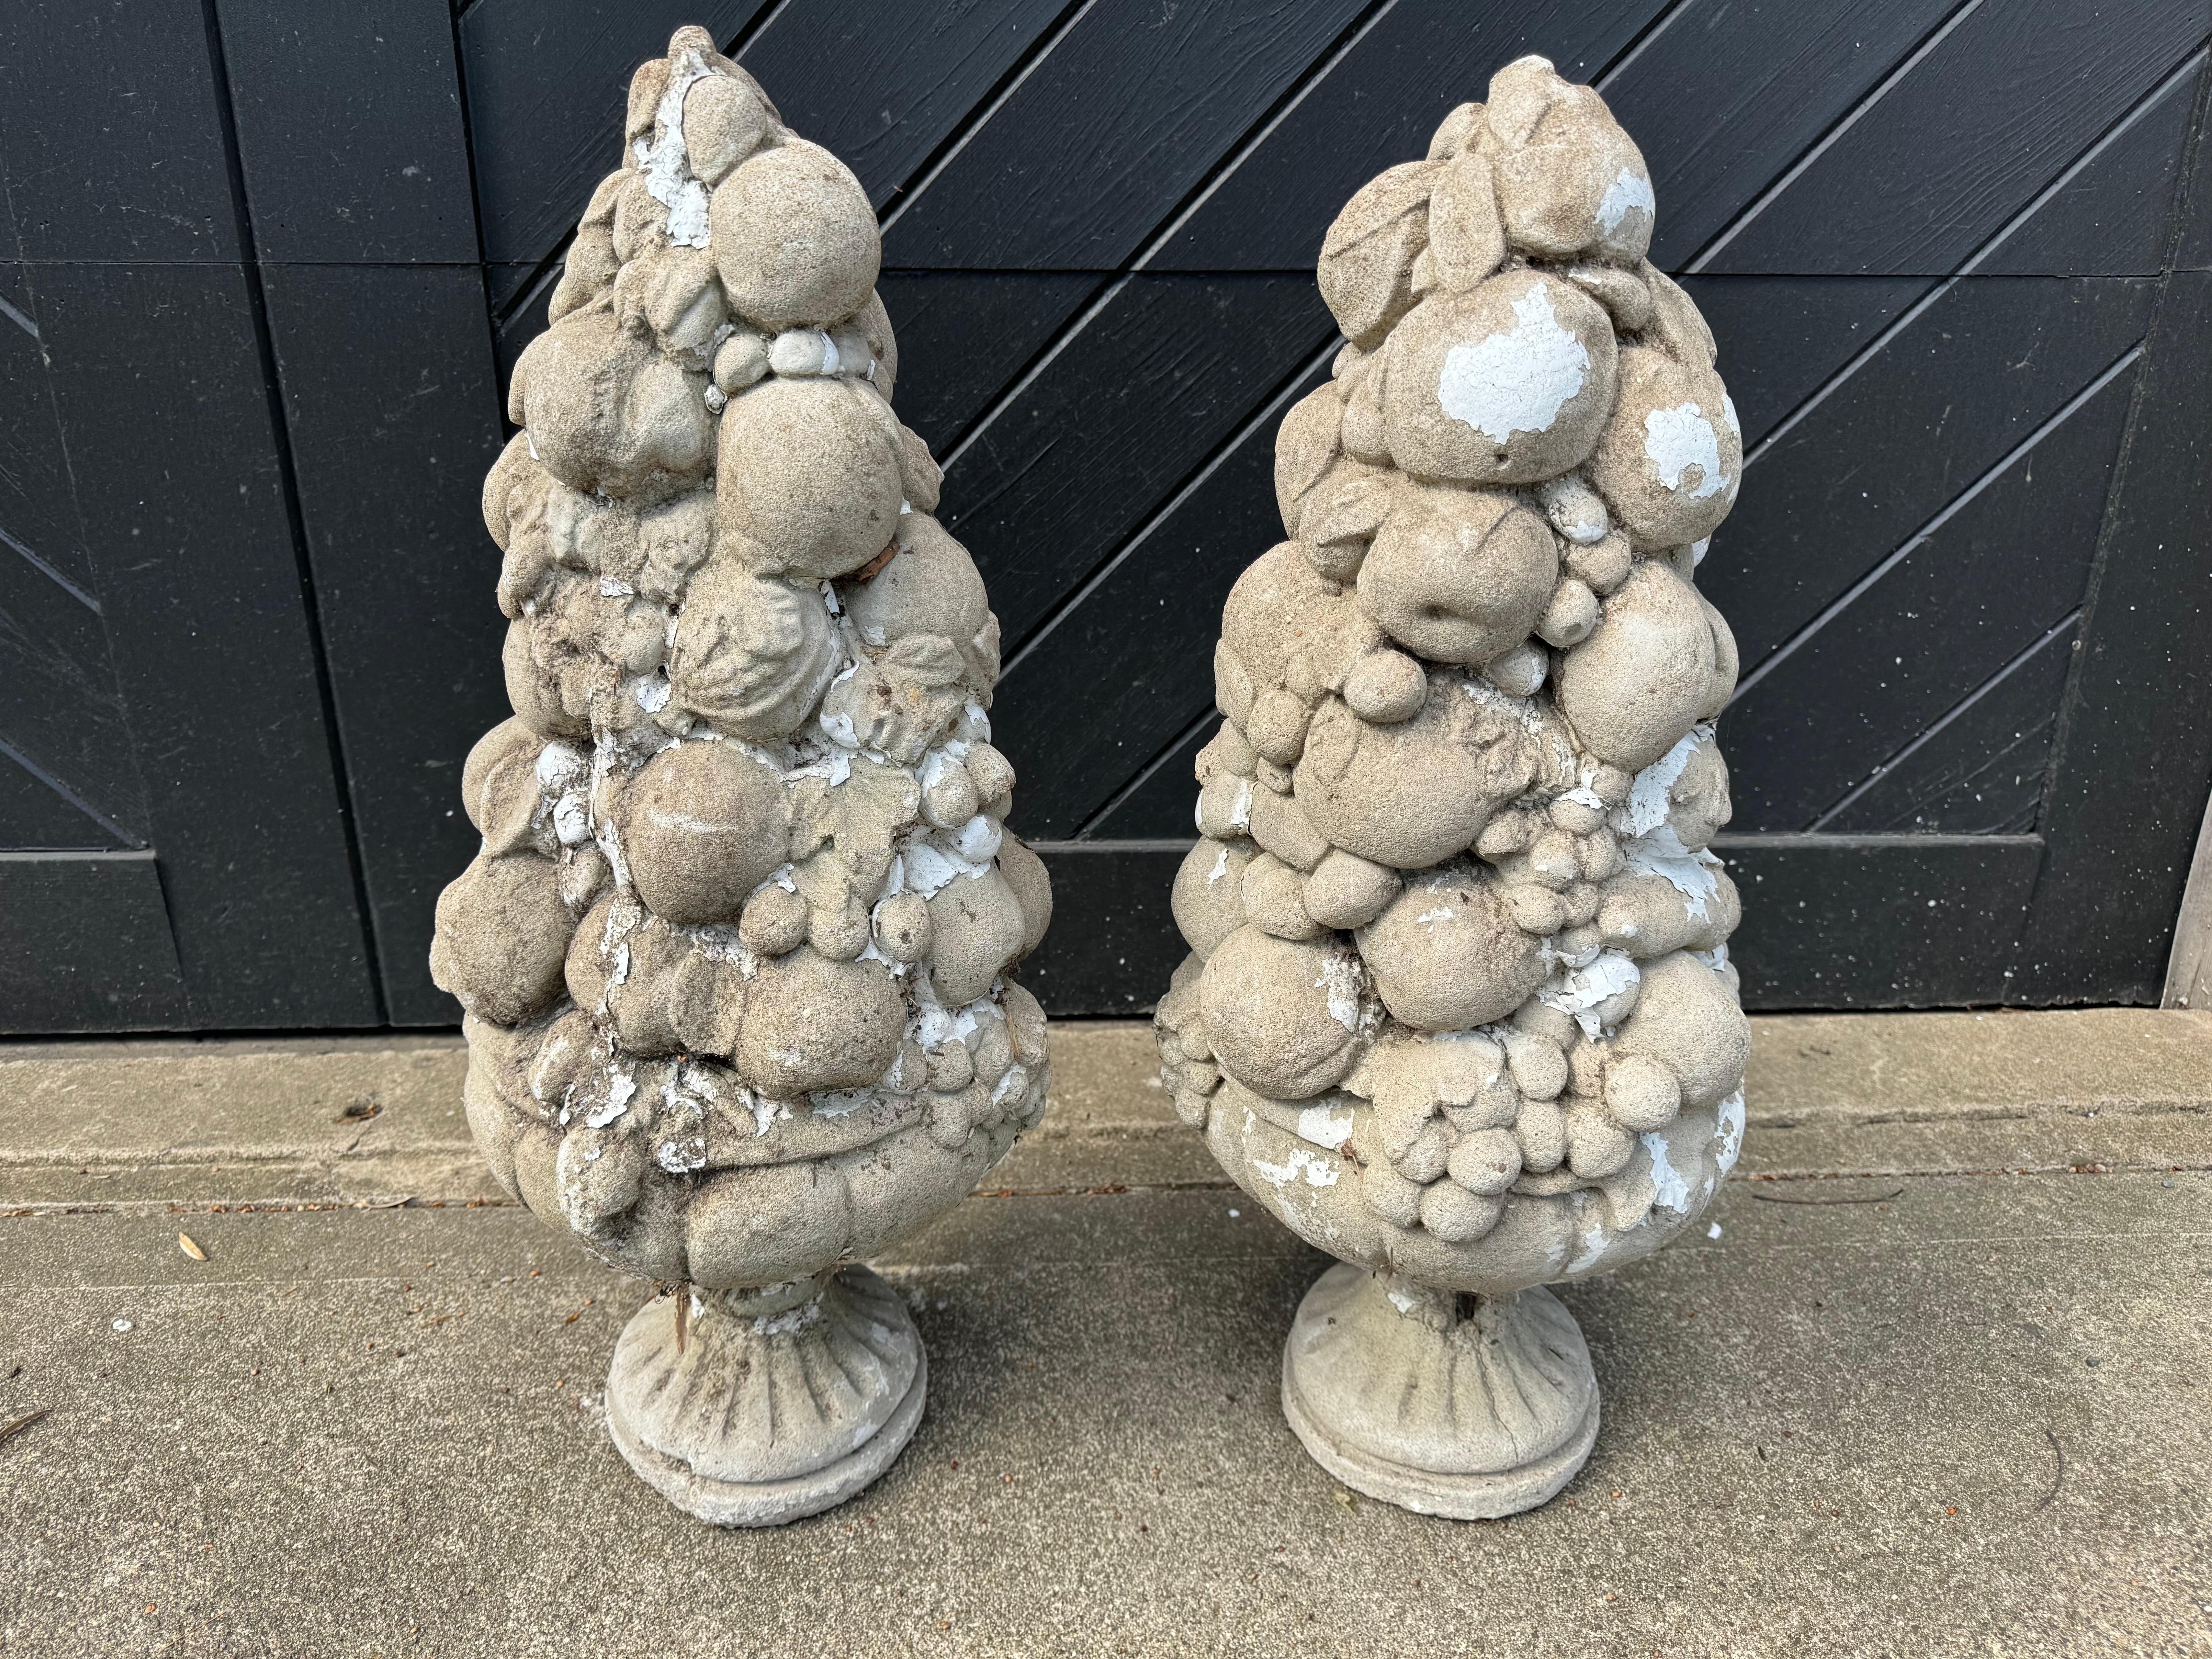 Lovely pair of vintage cement garden ornaments depicting fruit piled high in obelisk forms.  Original vestiges of white paint.